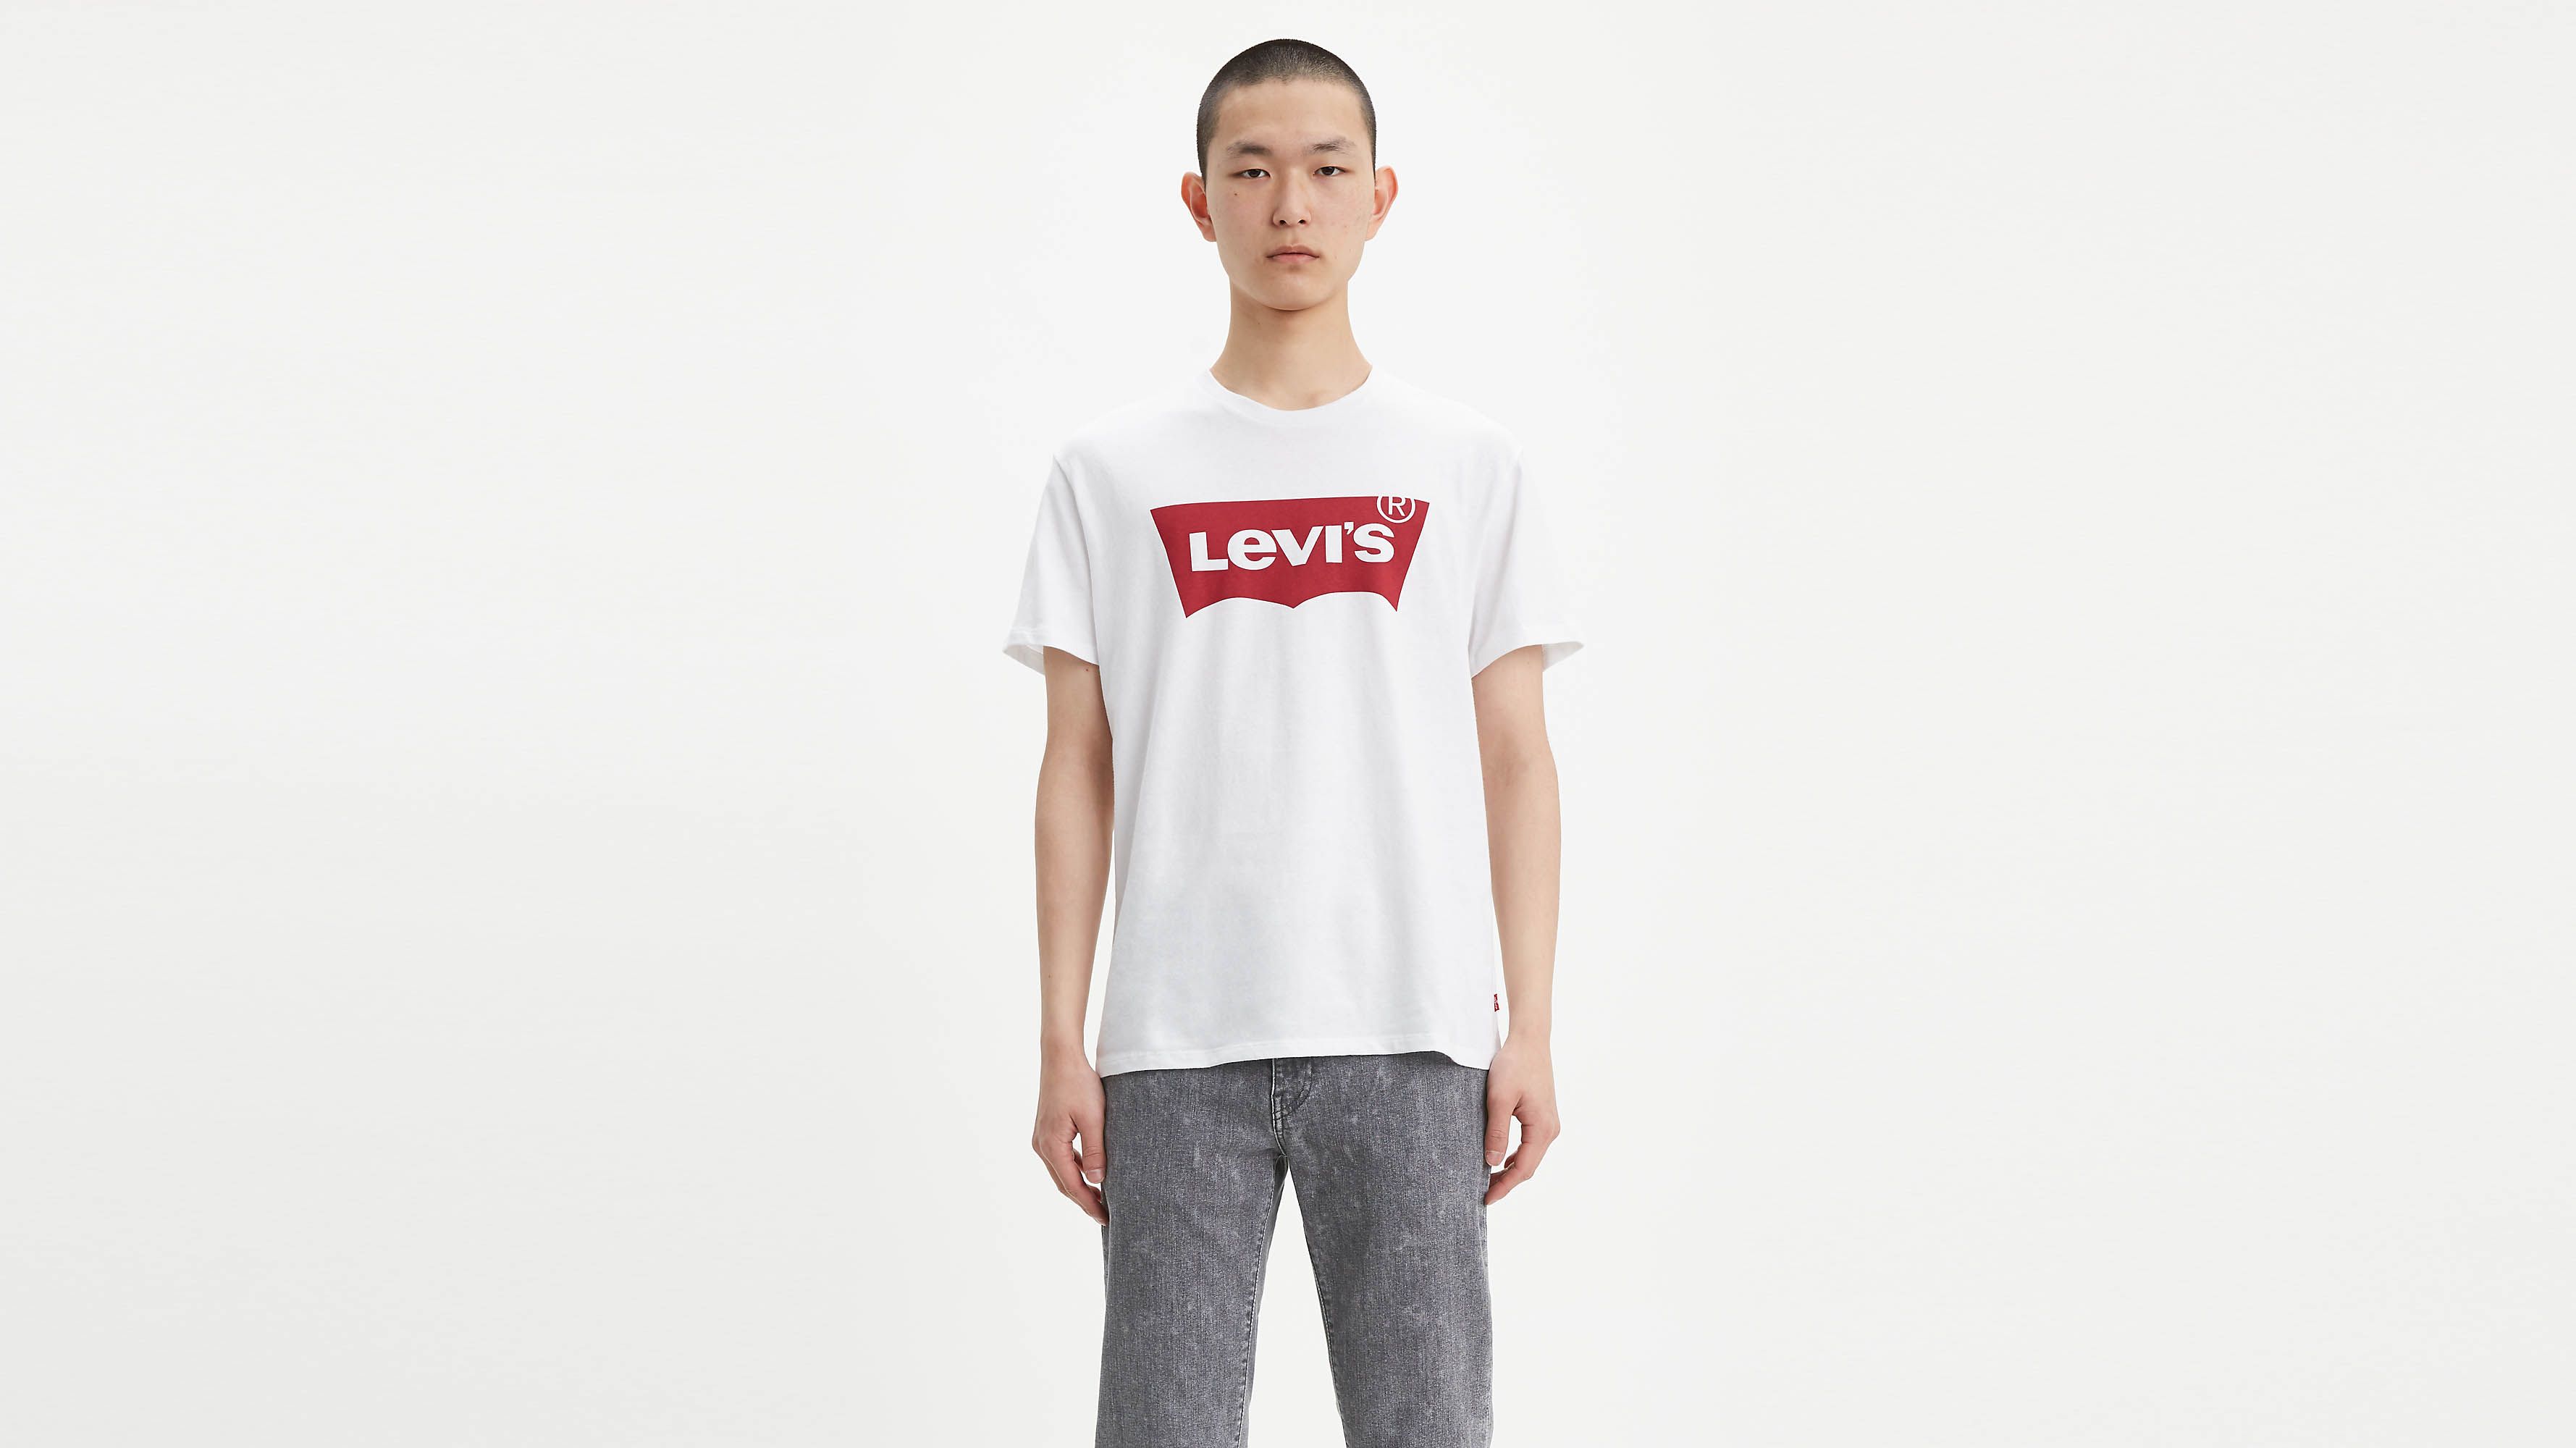 levis white t-shirt